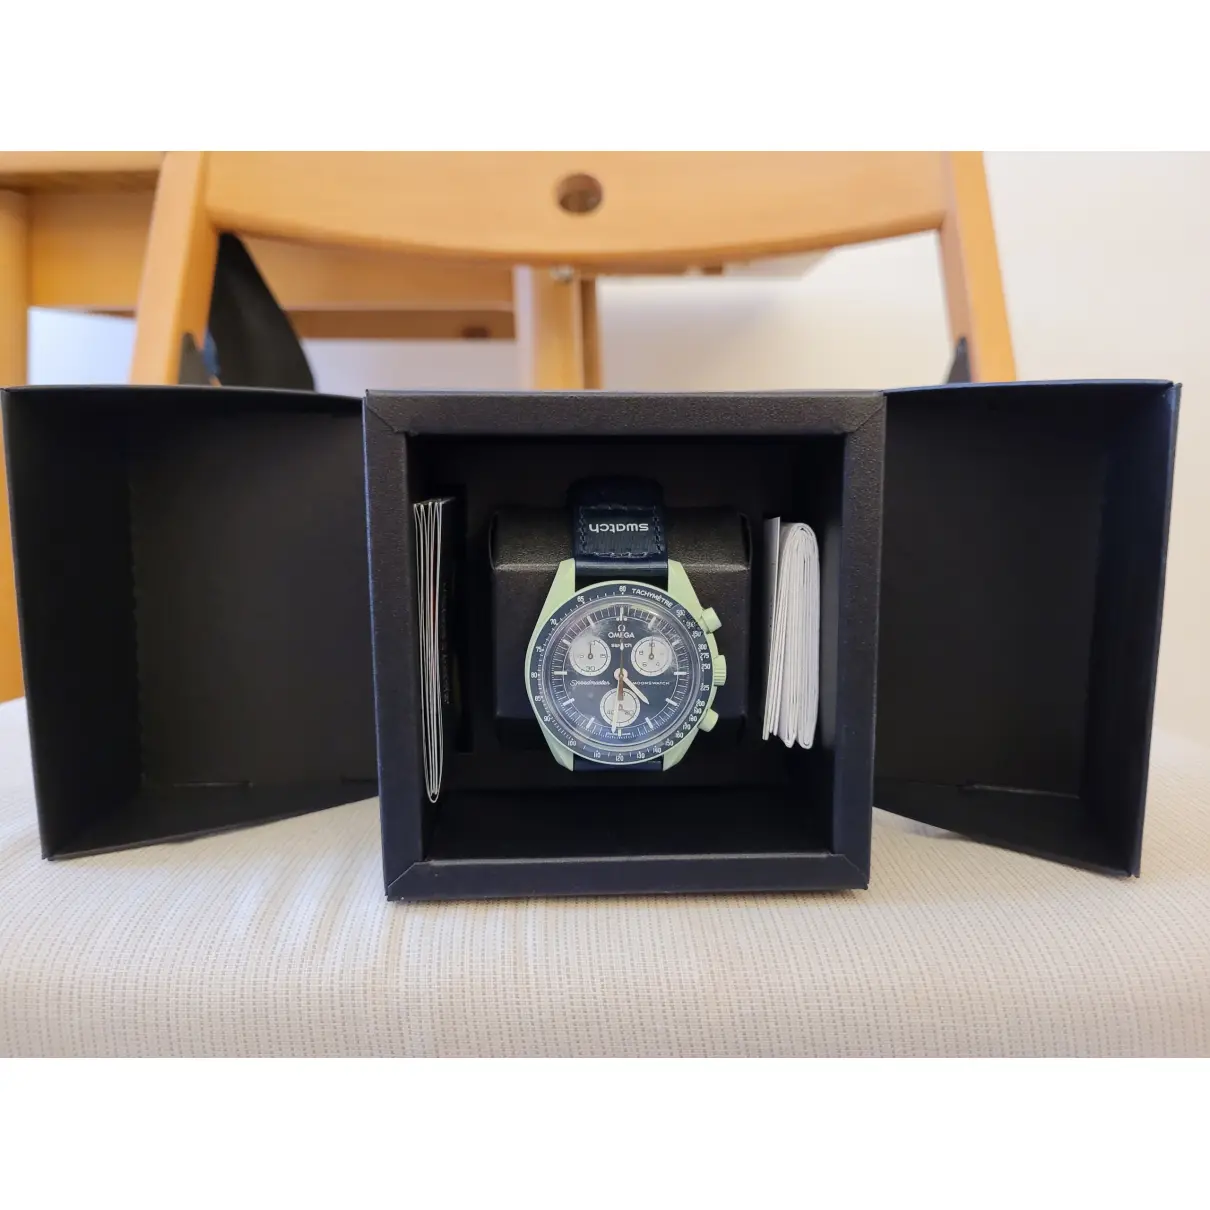 Buy Omega Ceramic watch online